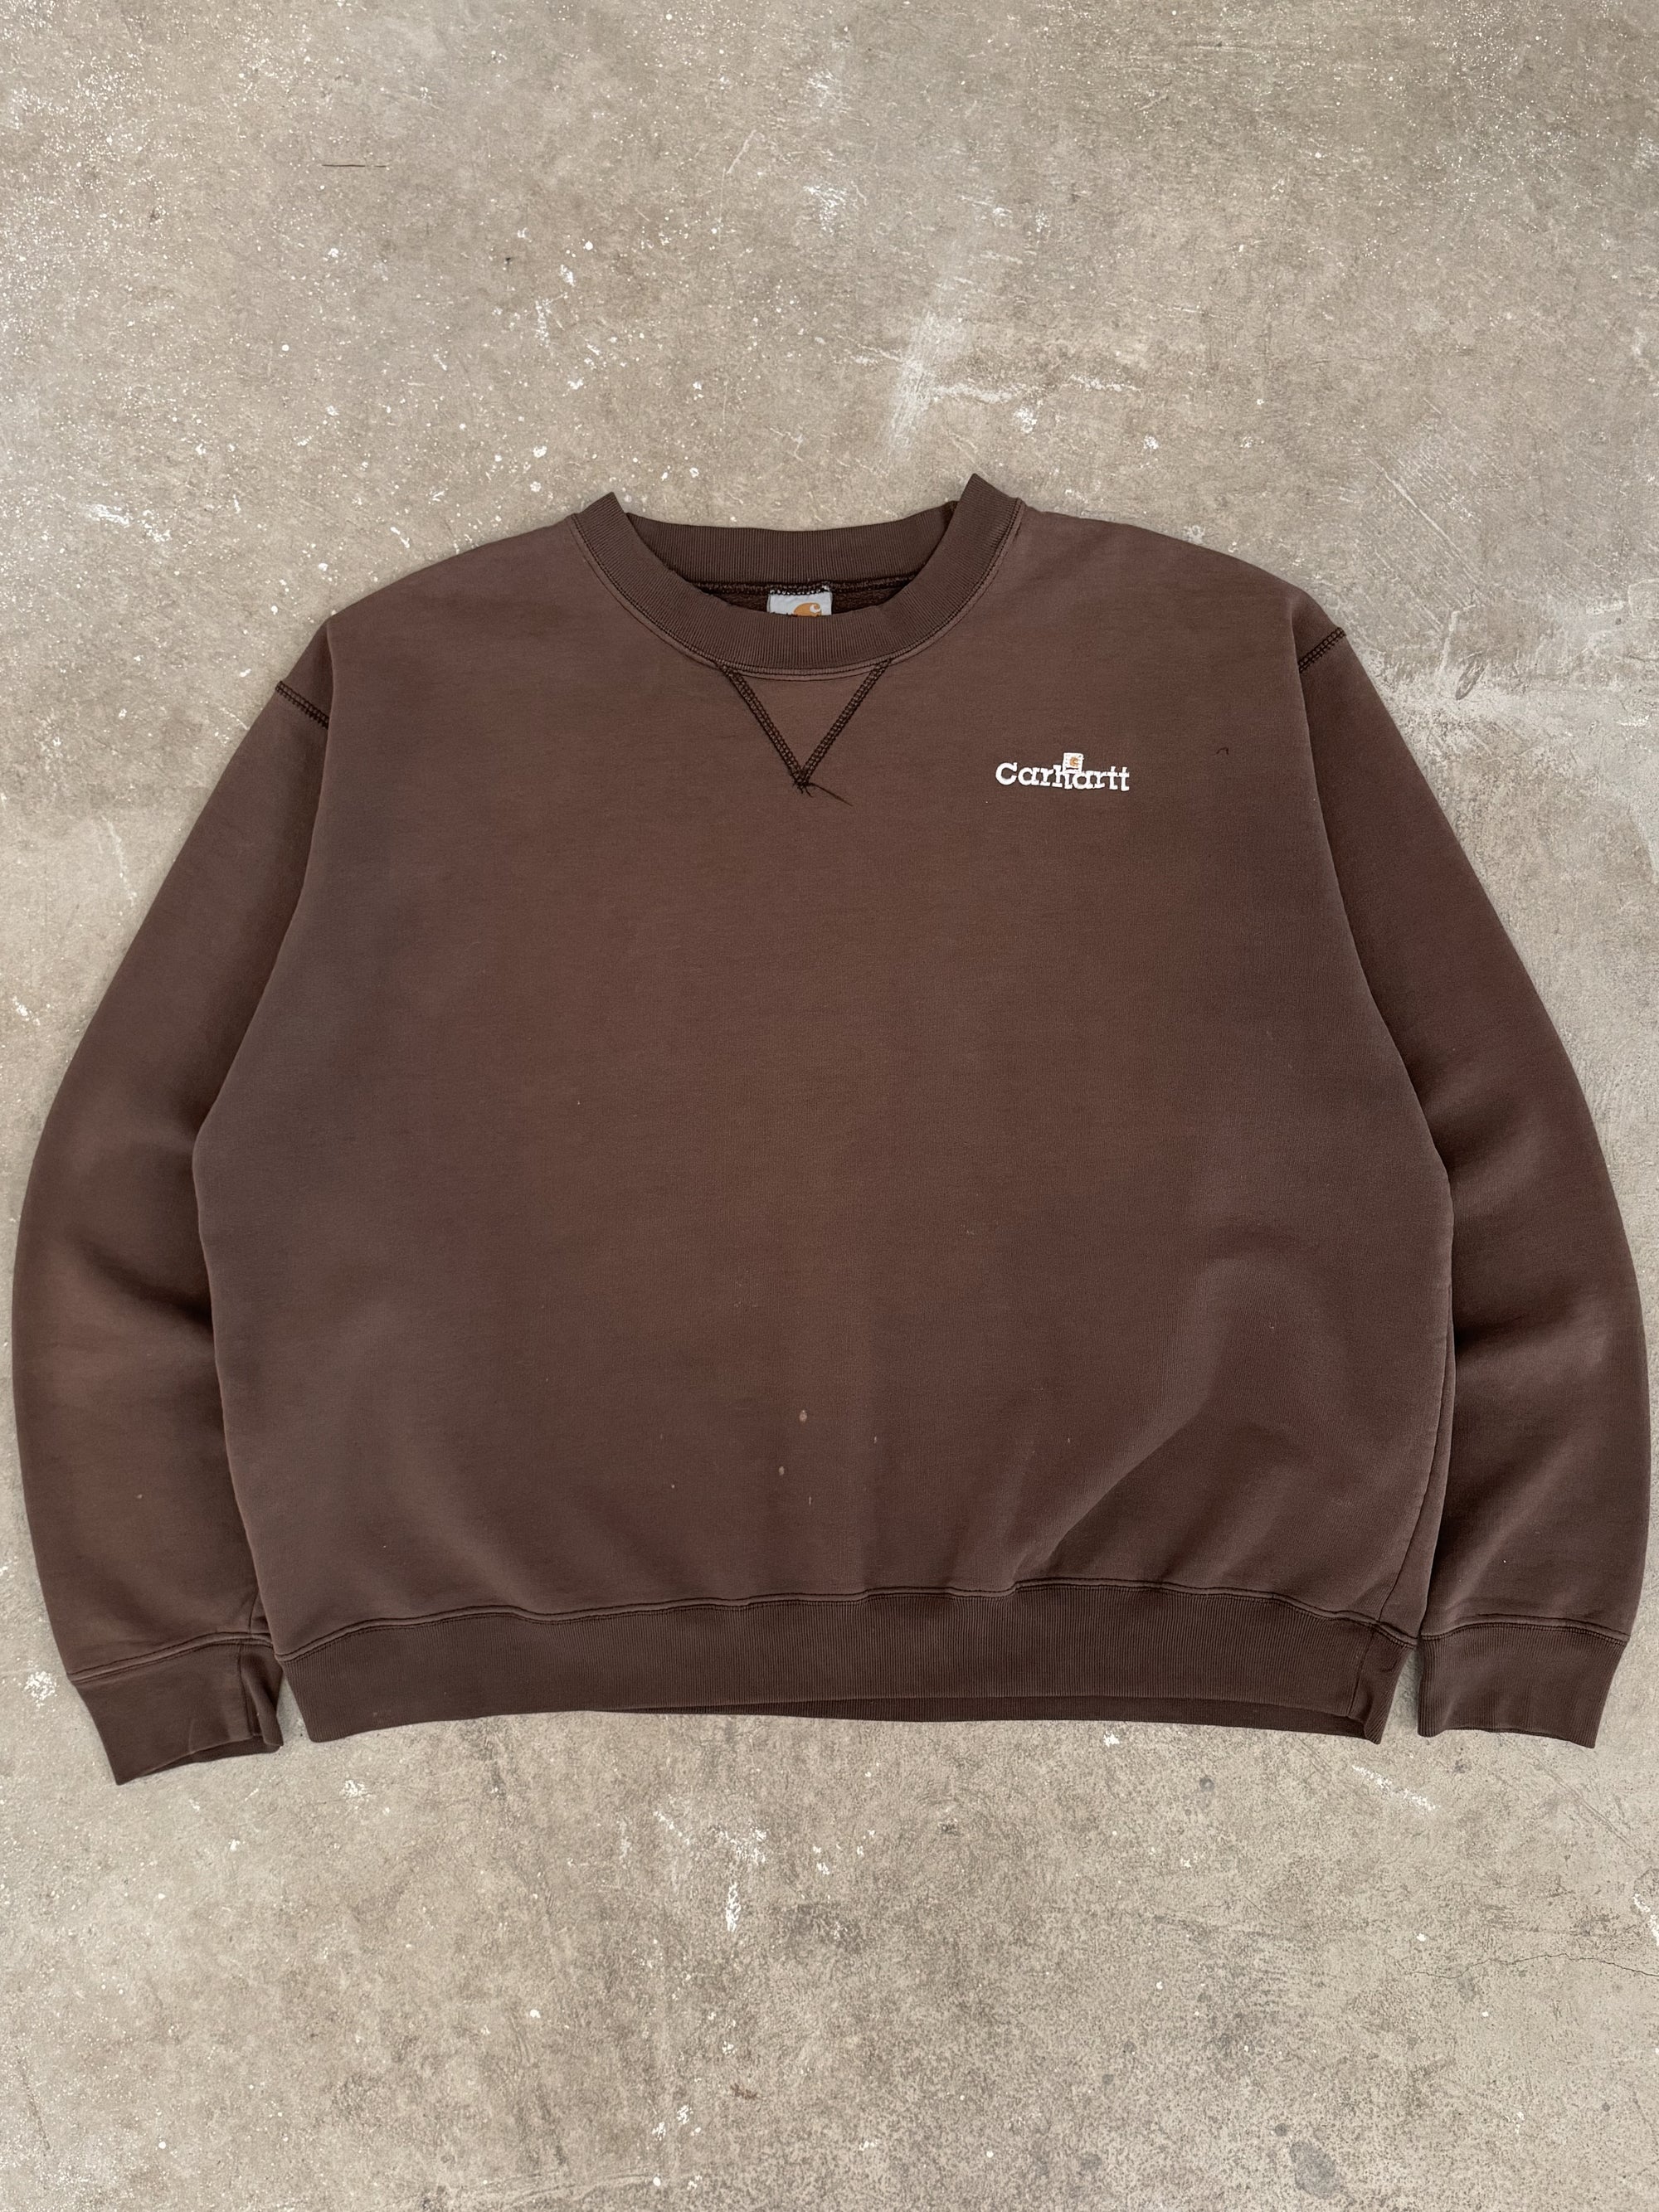 1990s Carhartt Faded Brown Sweatshirt (XXL)